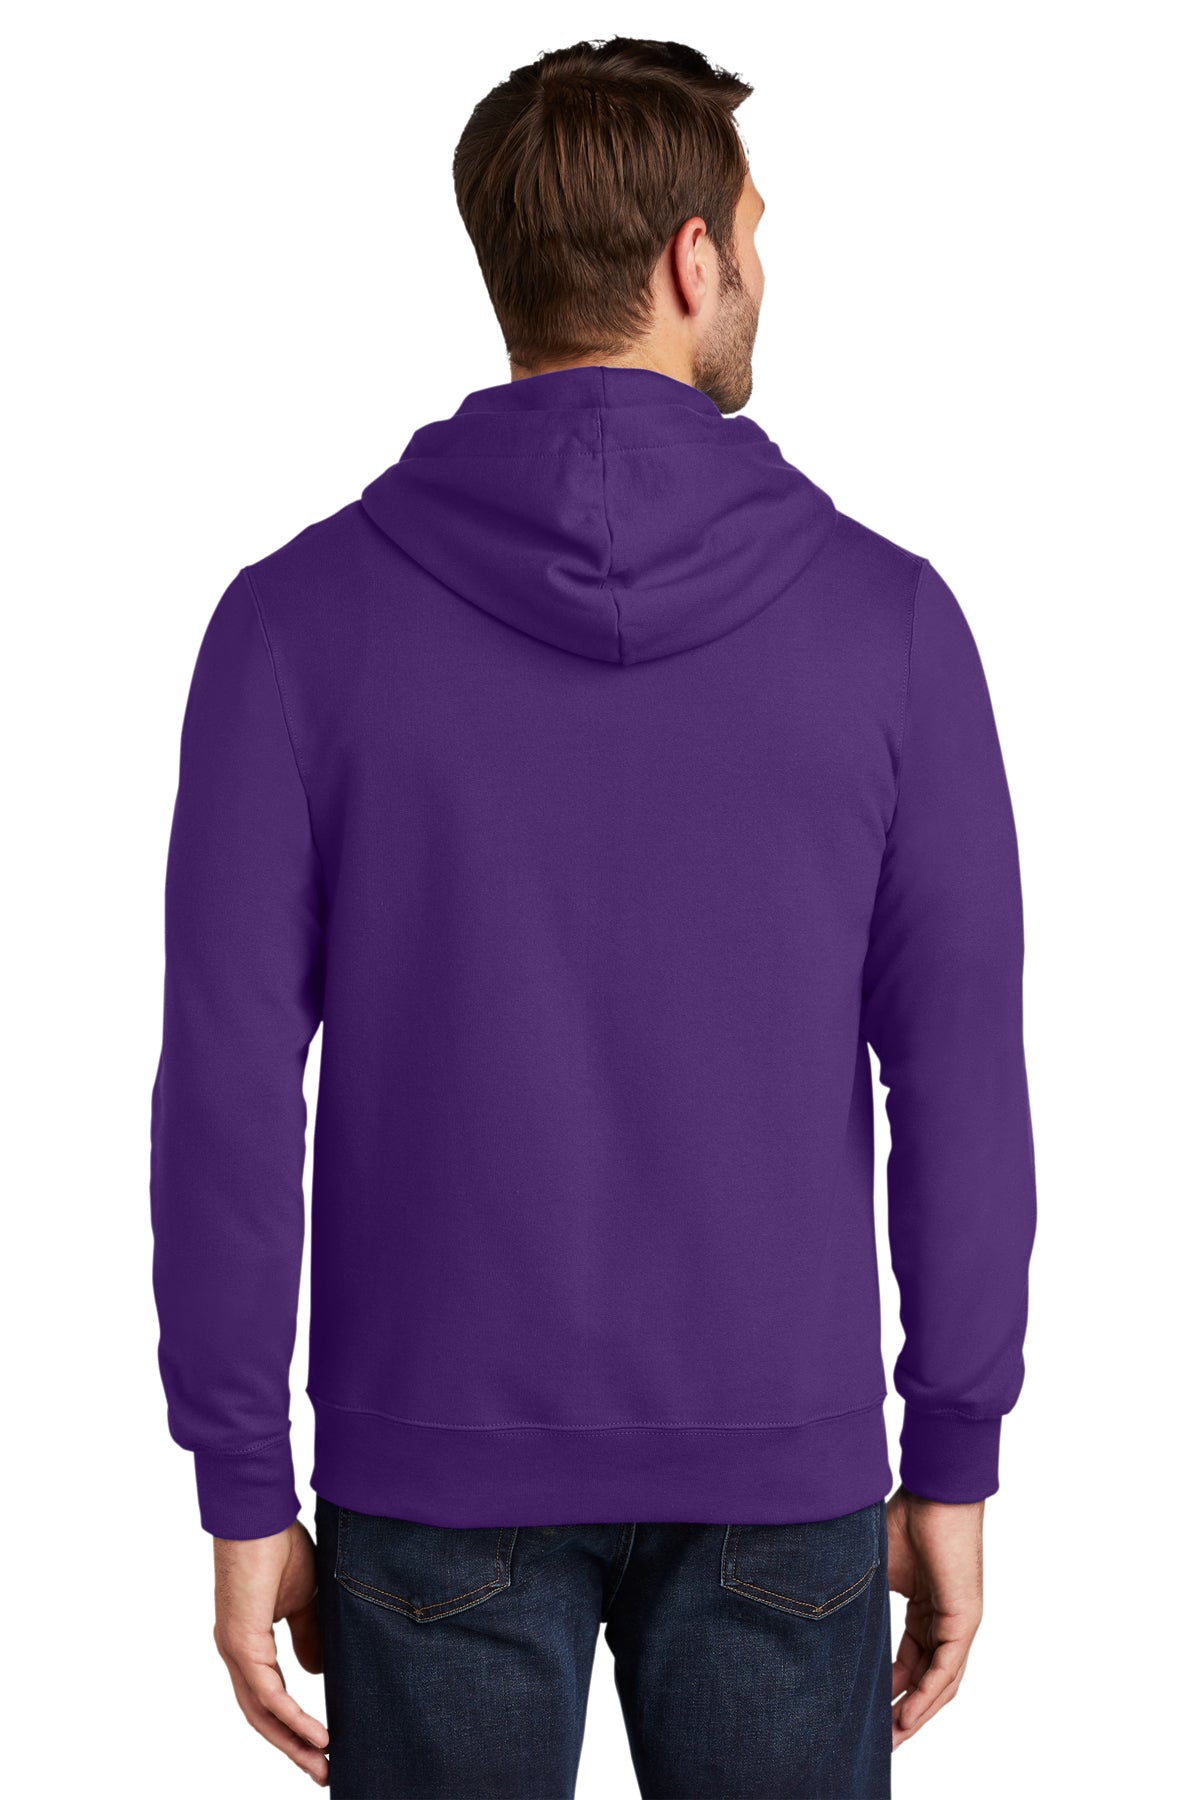 port & company_pc850zh _team purple_company_logo_sweatshirts